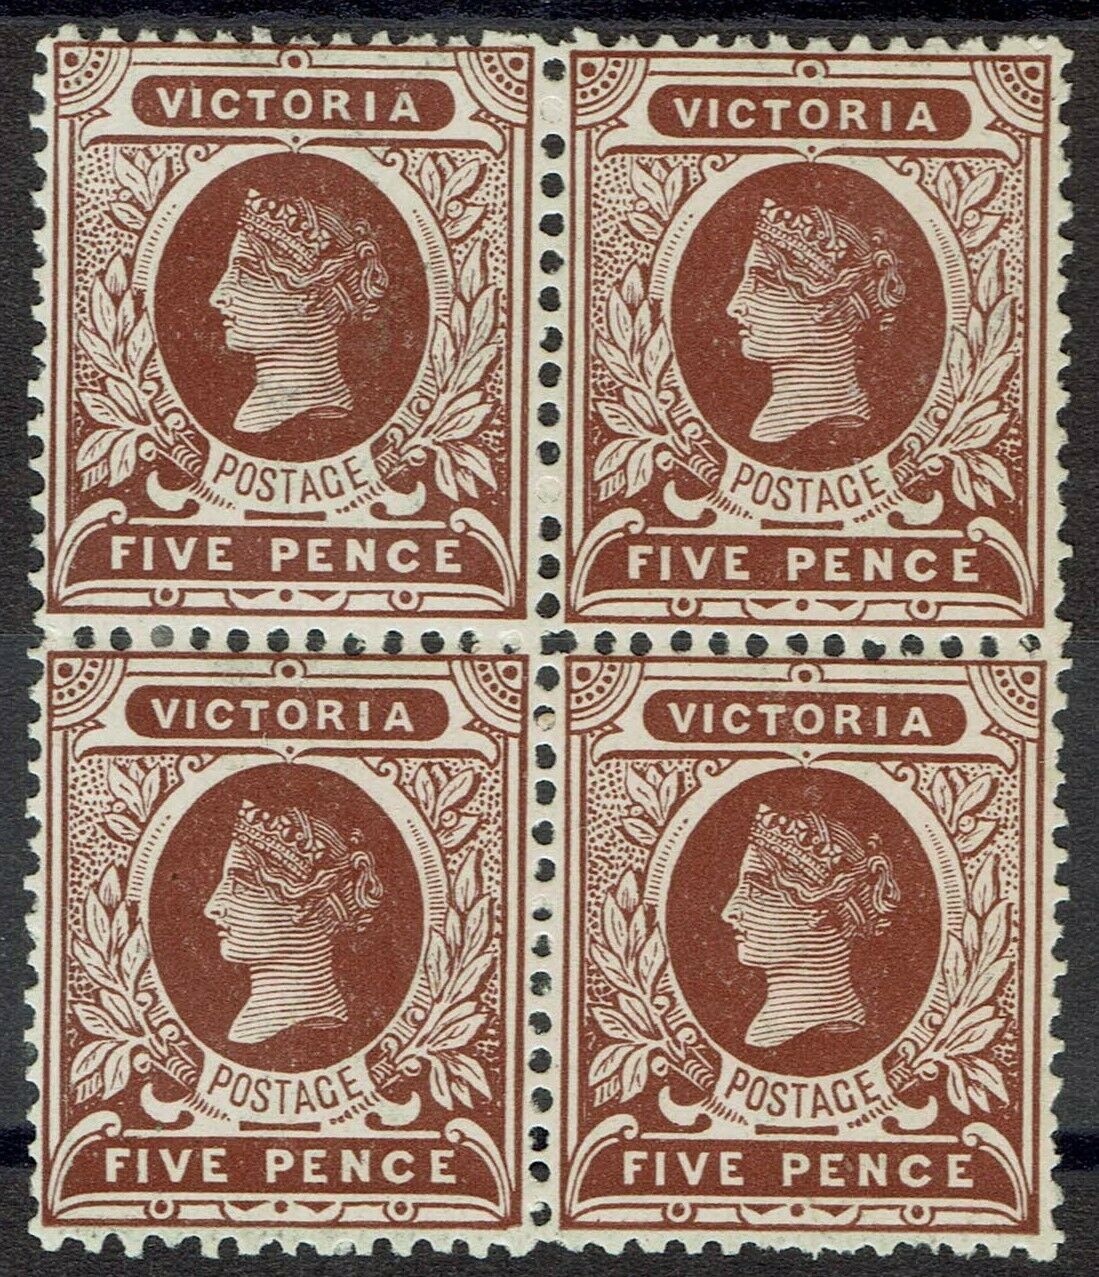 Victoria 1901 Qv Postage 5d Block Wmk V/crown Perf 12.5